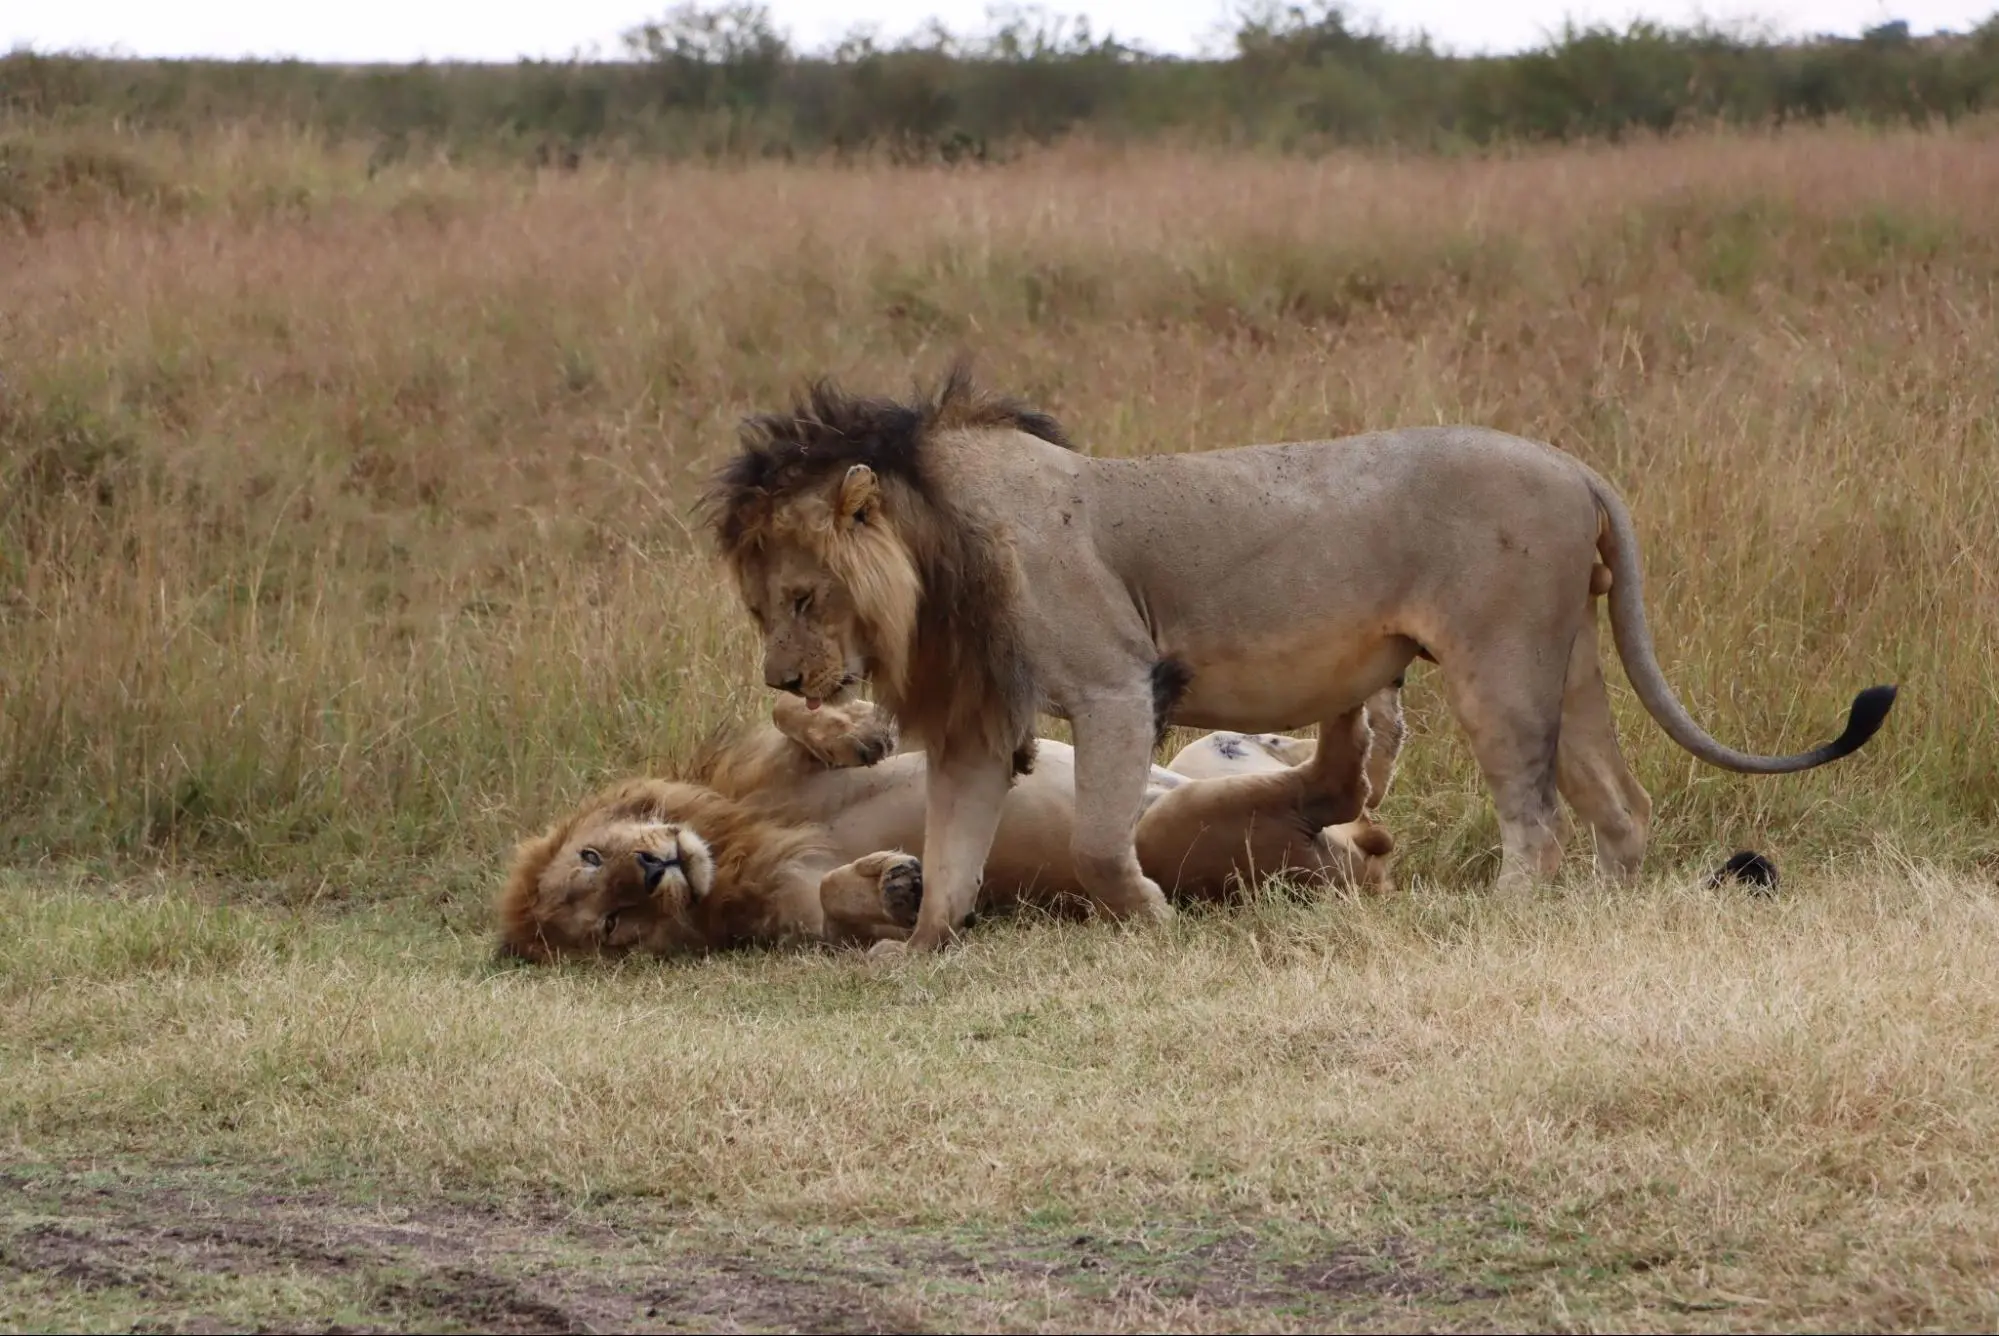 Lions spotted in Masai Mara near the Mara river.